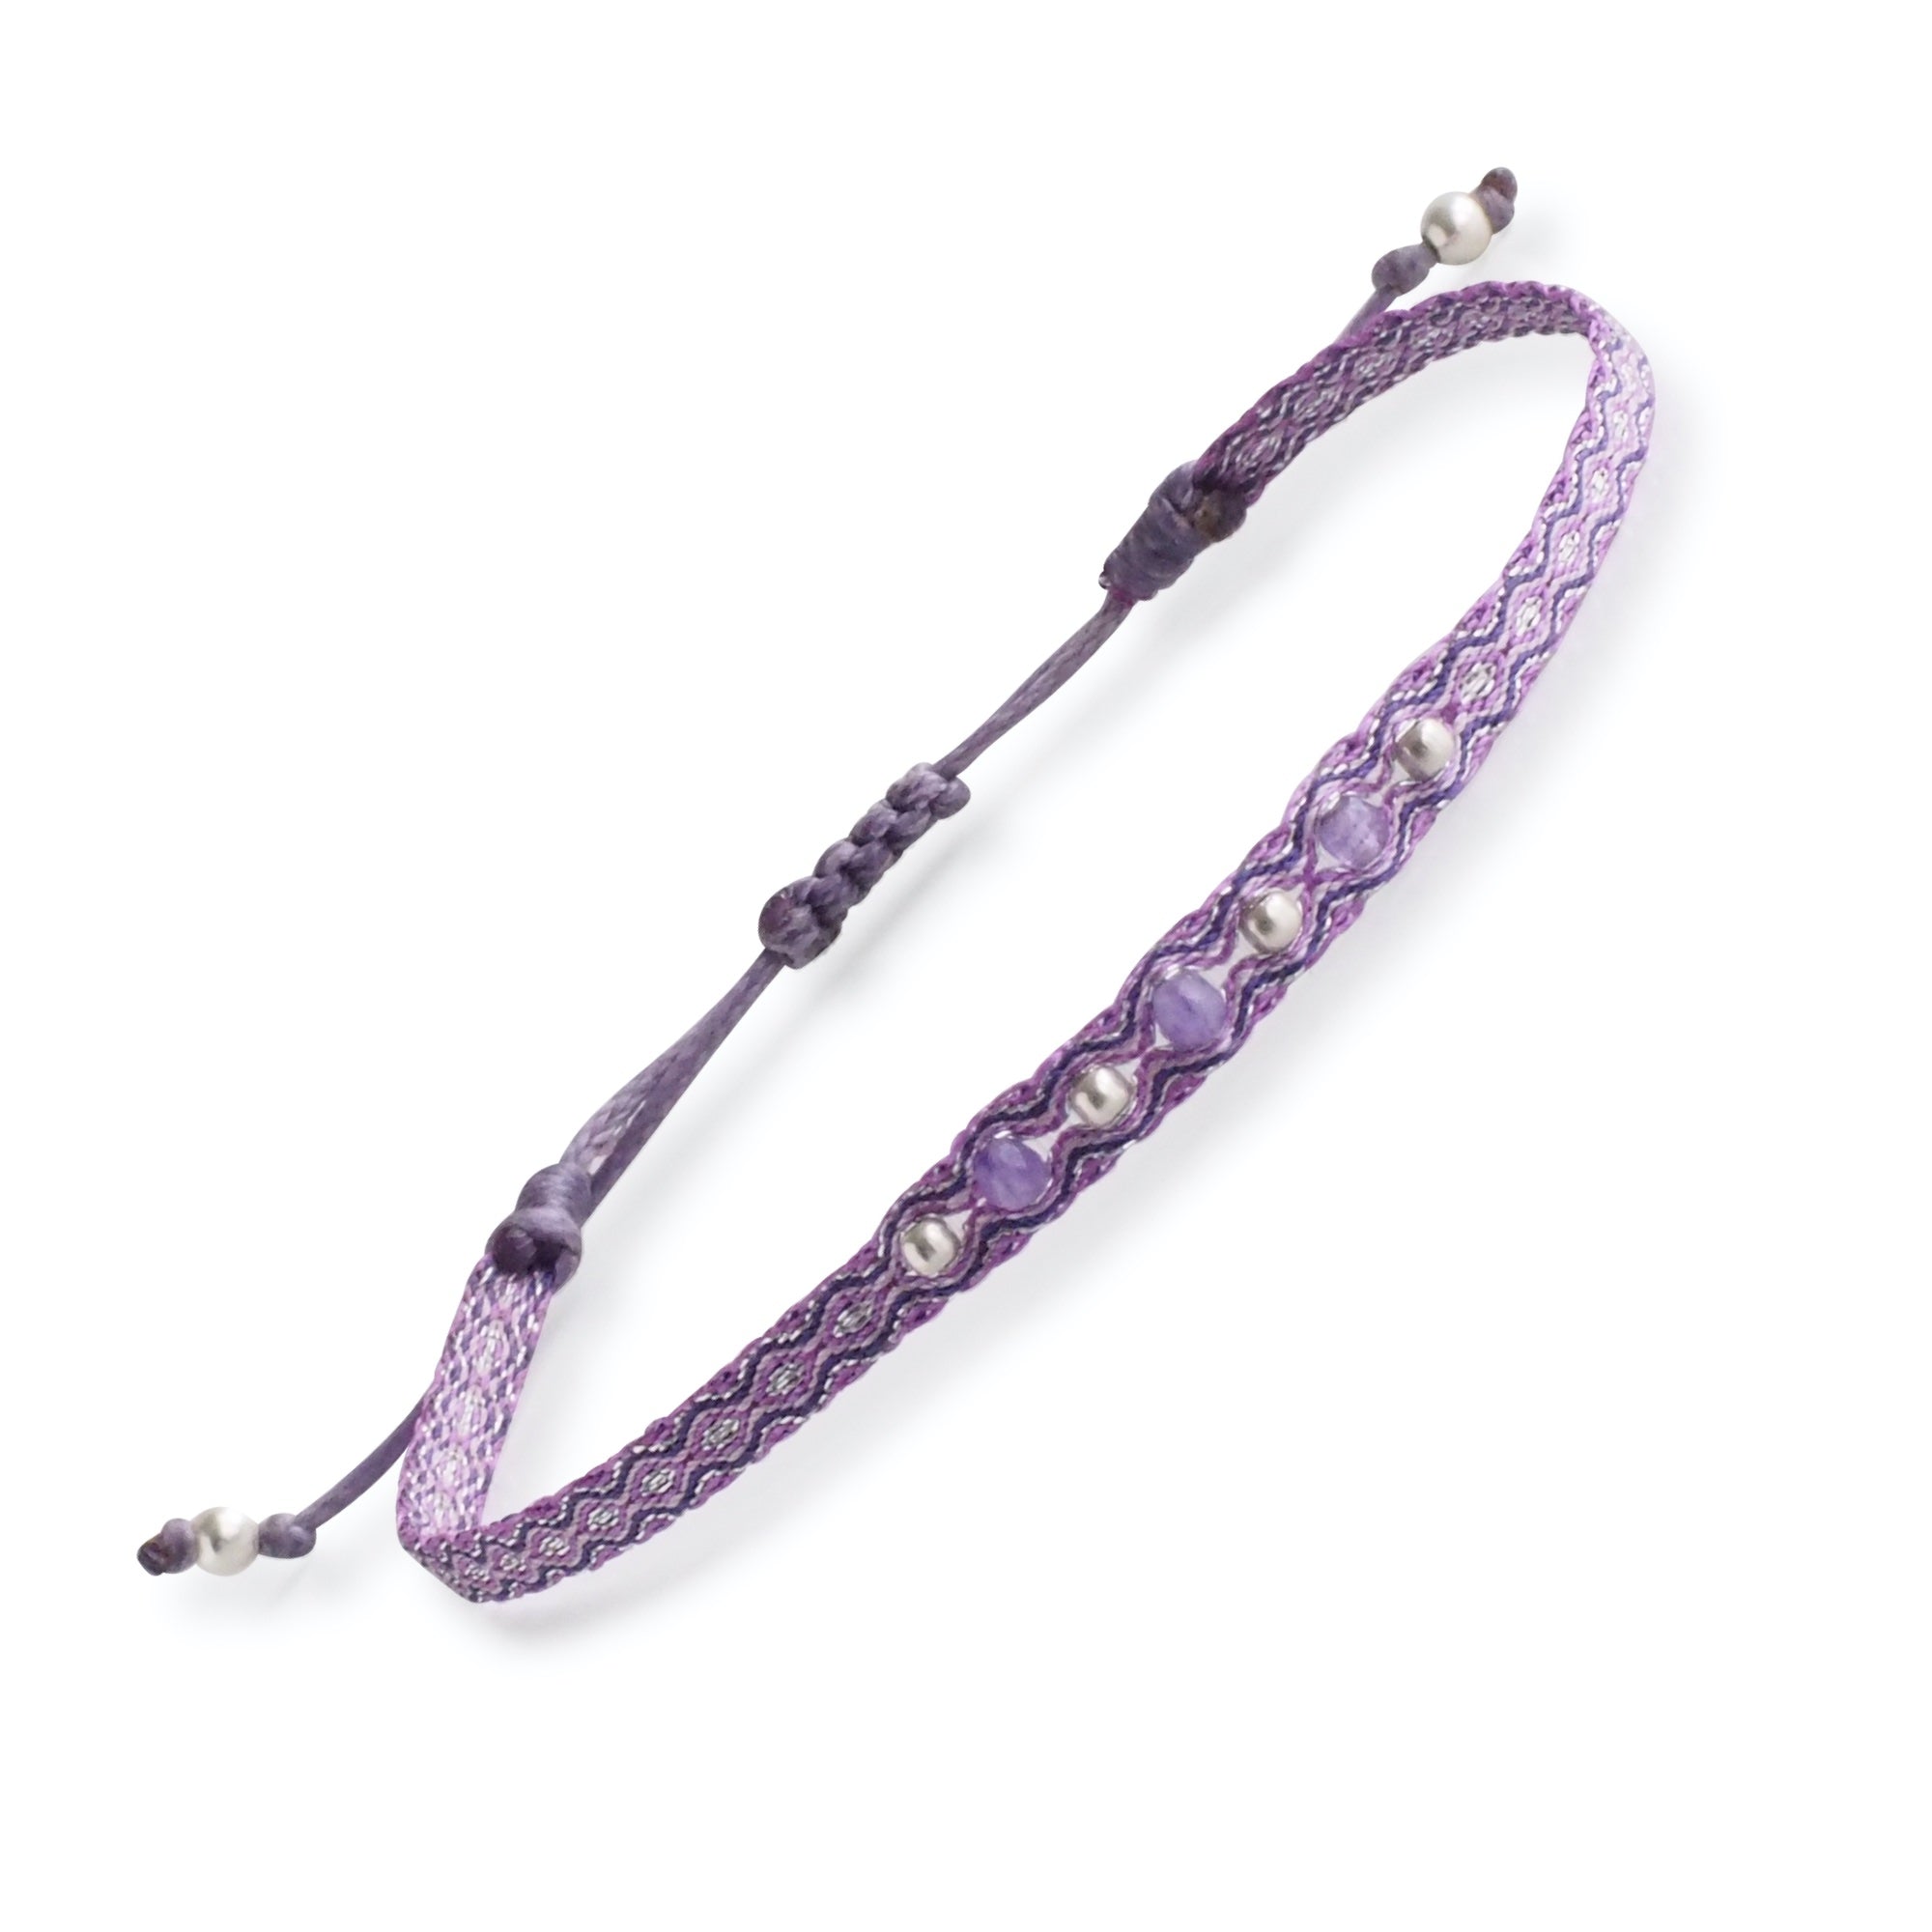 Egyptian Loom Chakra Bracelet, Violet with Amethyst and Silver beads, 40 threads adjustable bracelet